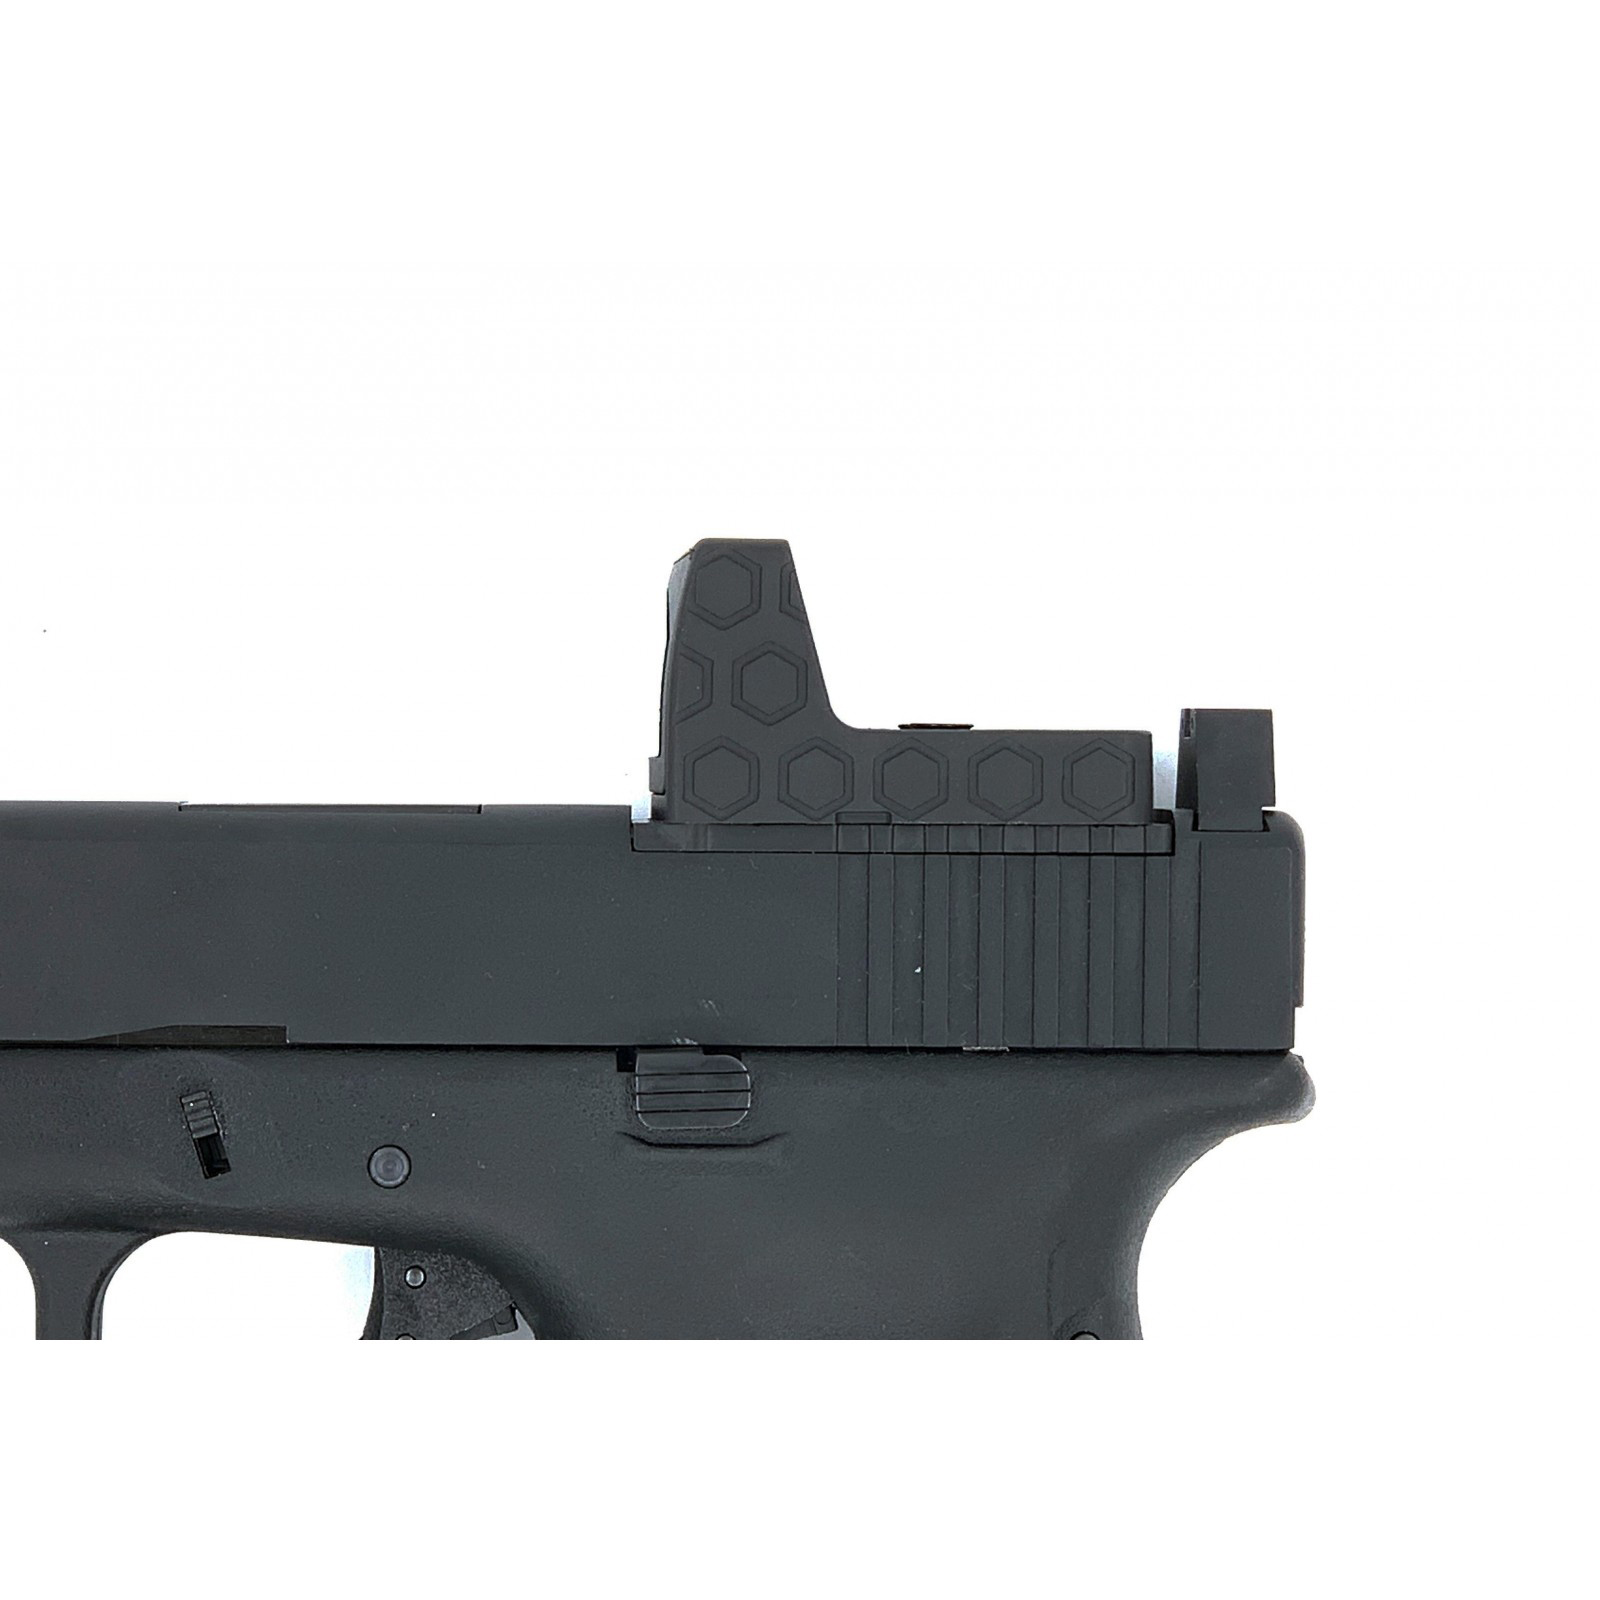 Pistola Airsoft WE Glock G17 Gen 5 MOS GBB Metal e Polímero Black - Calibre 6 mm  - MAB AIRSOFT